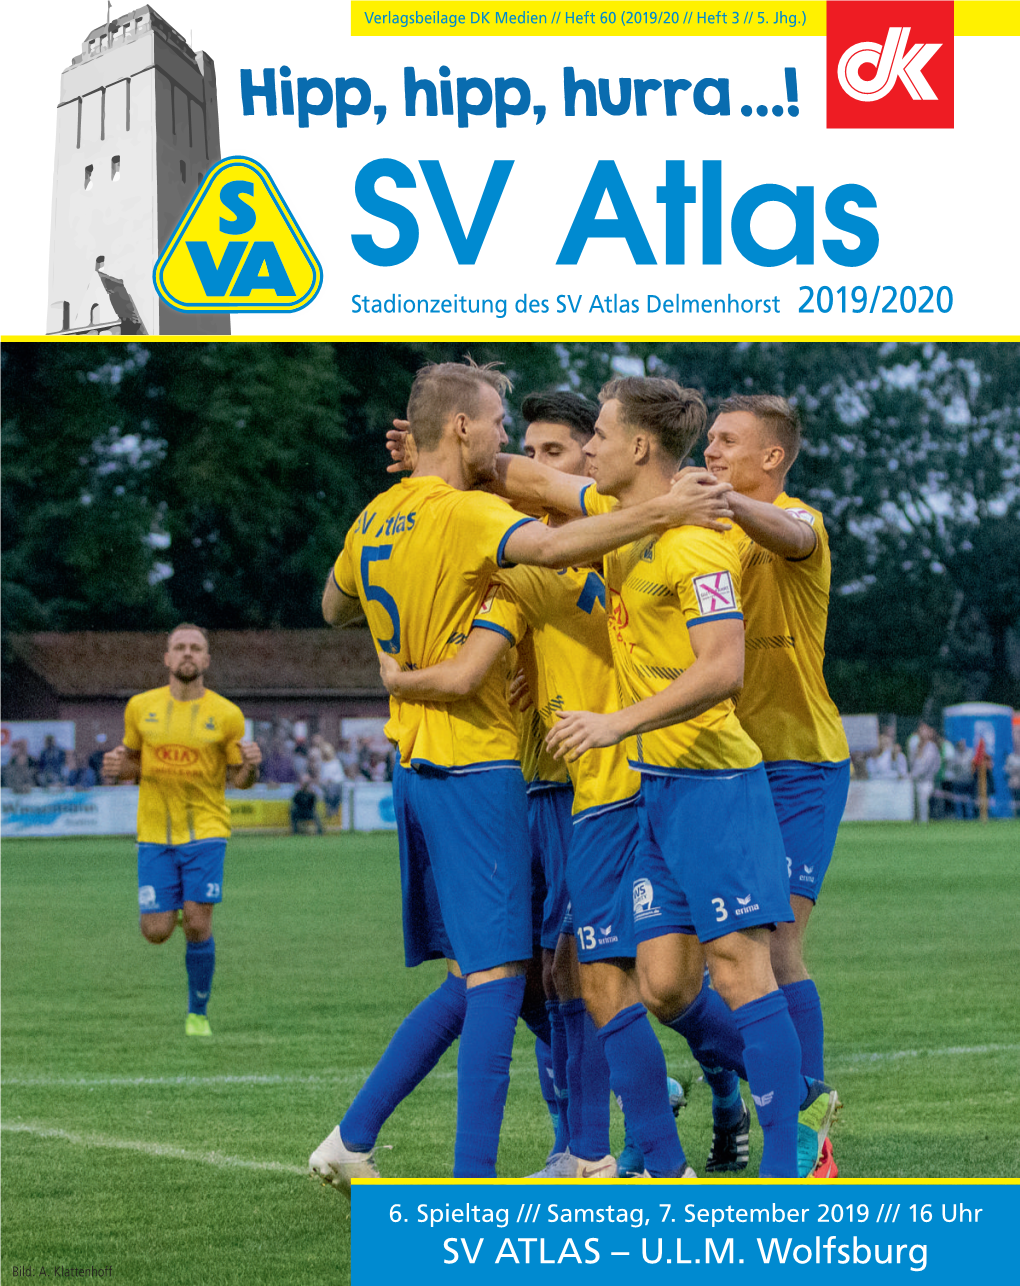 SV Atlas Stadionzeitung Des SV Atlas Delmenhorst 2019/2020